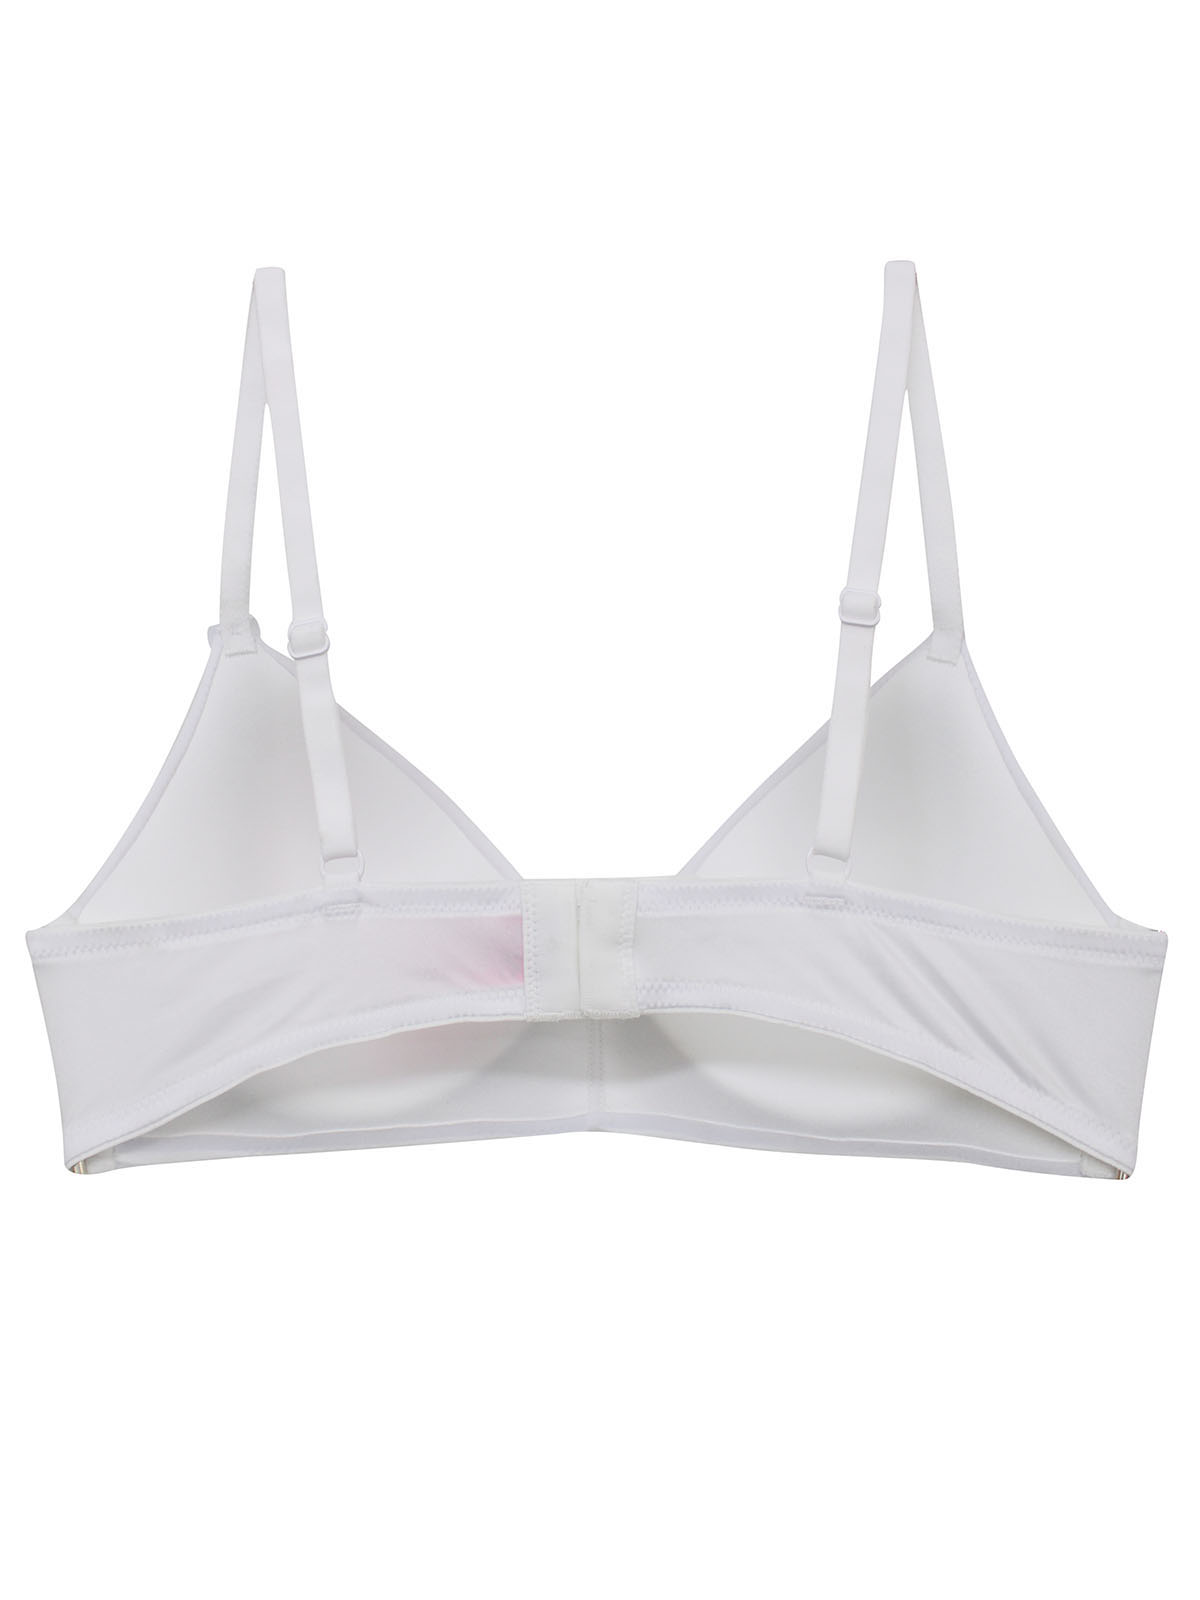 OO LALA JI 100% Cotton Women's Breast Lifts Bra Wireless Size 30C White